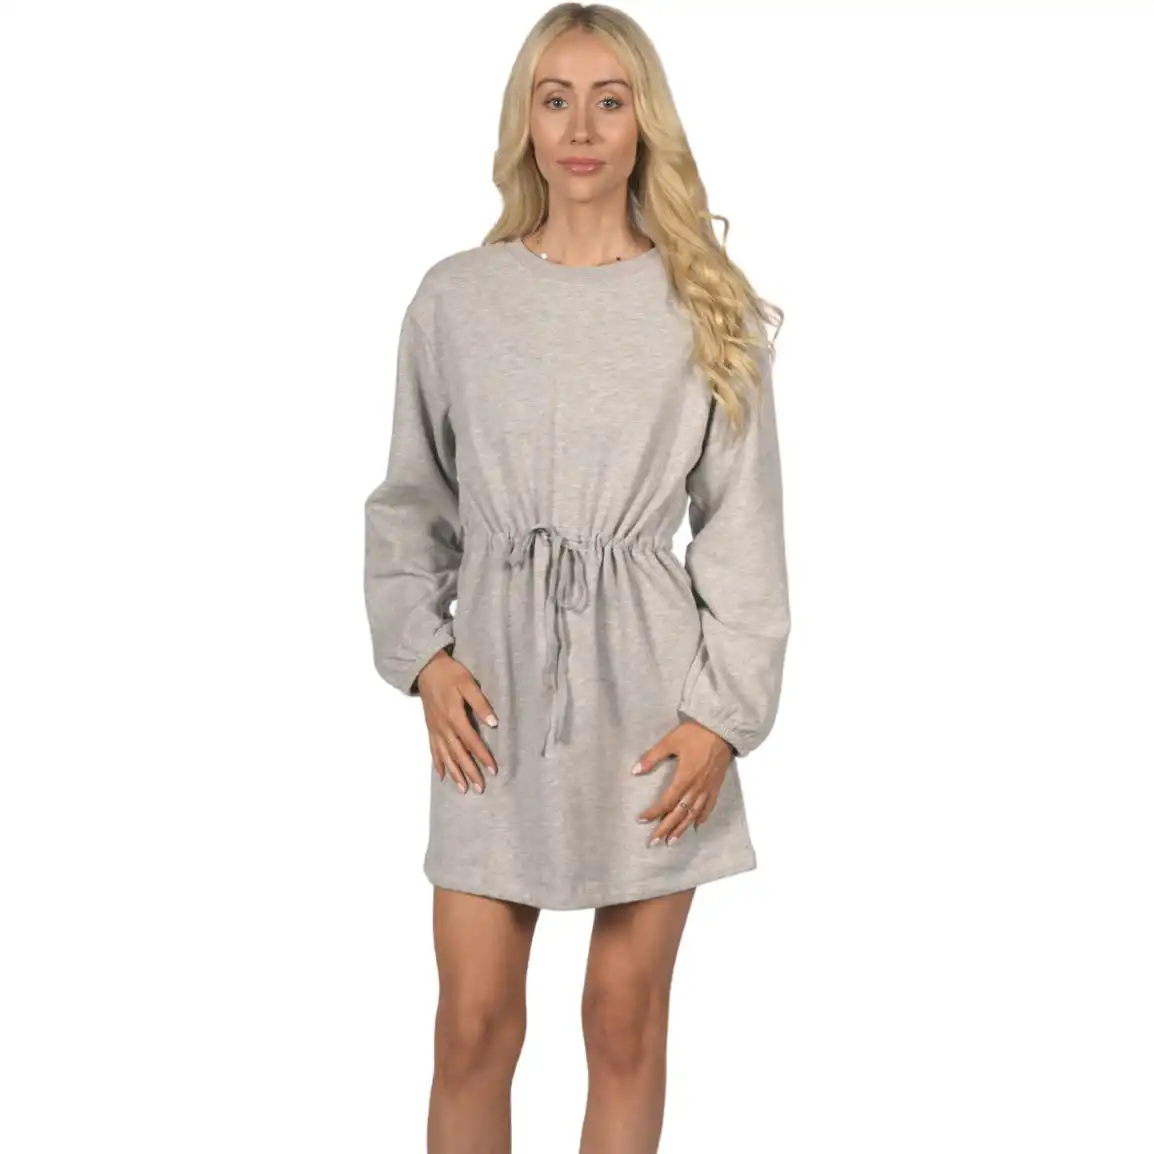 Topshop Miss Selfridge Women's Grey Sweater Dress